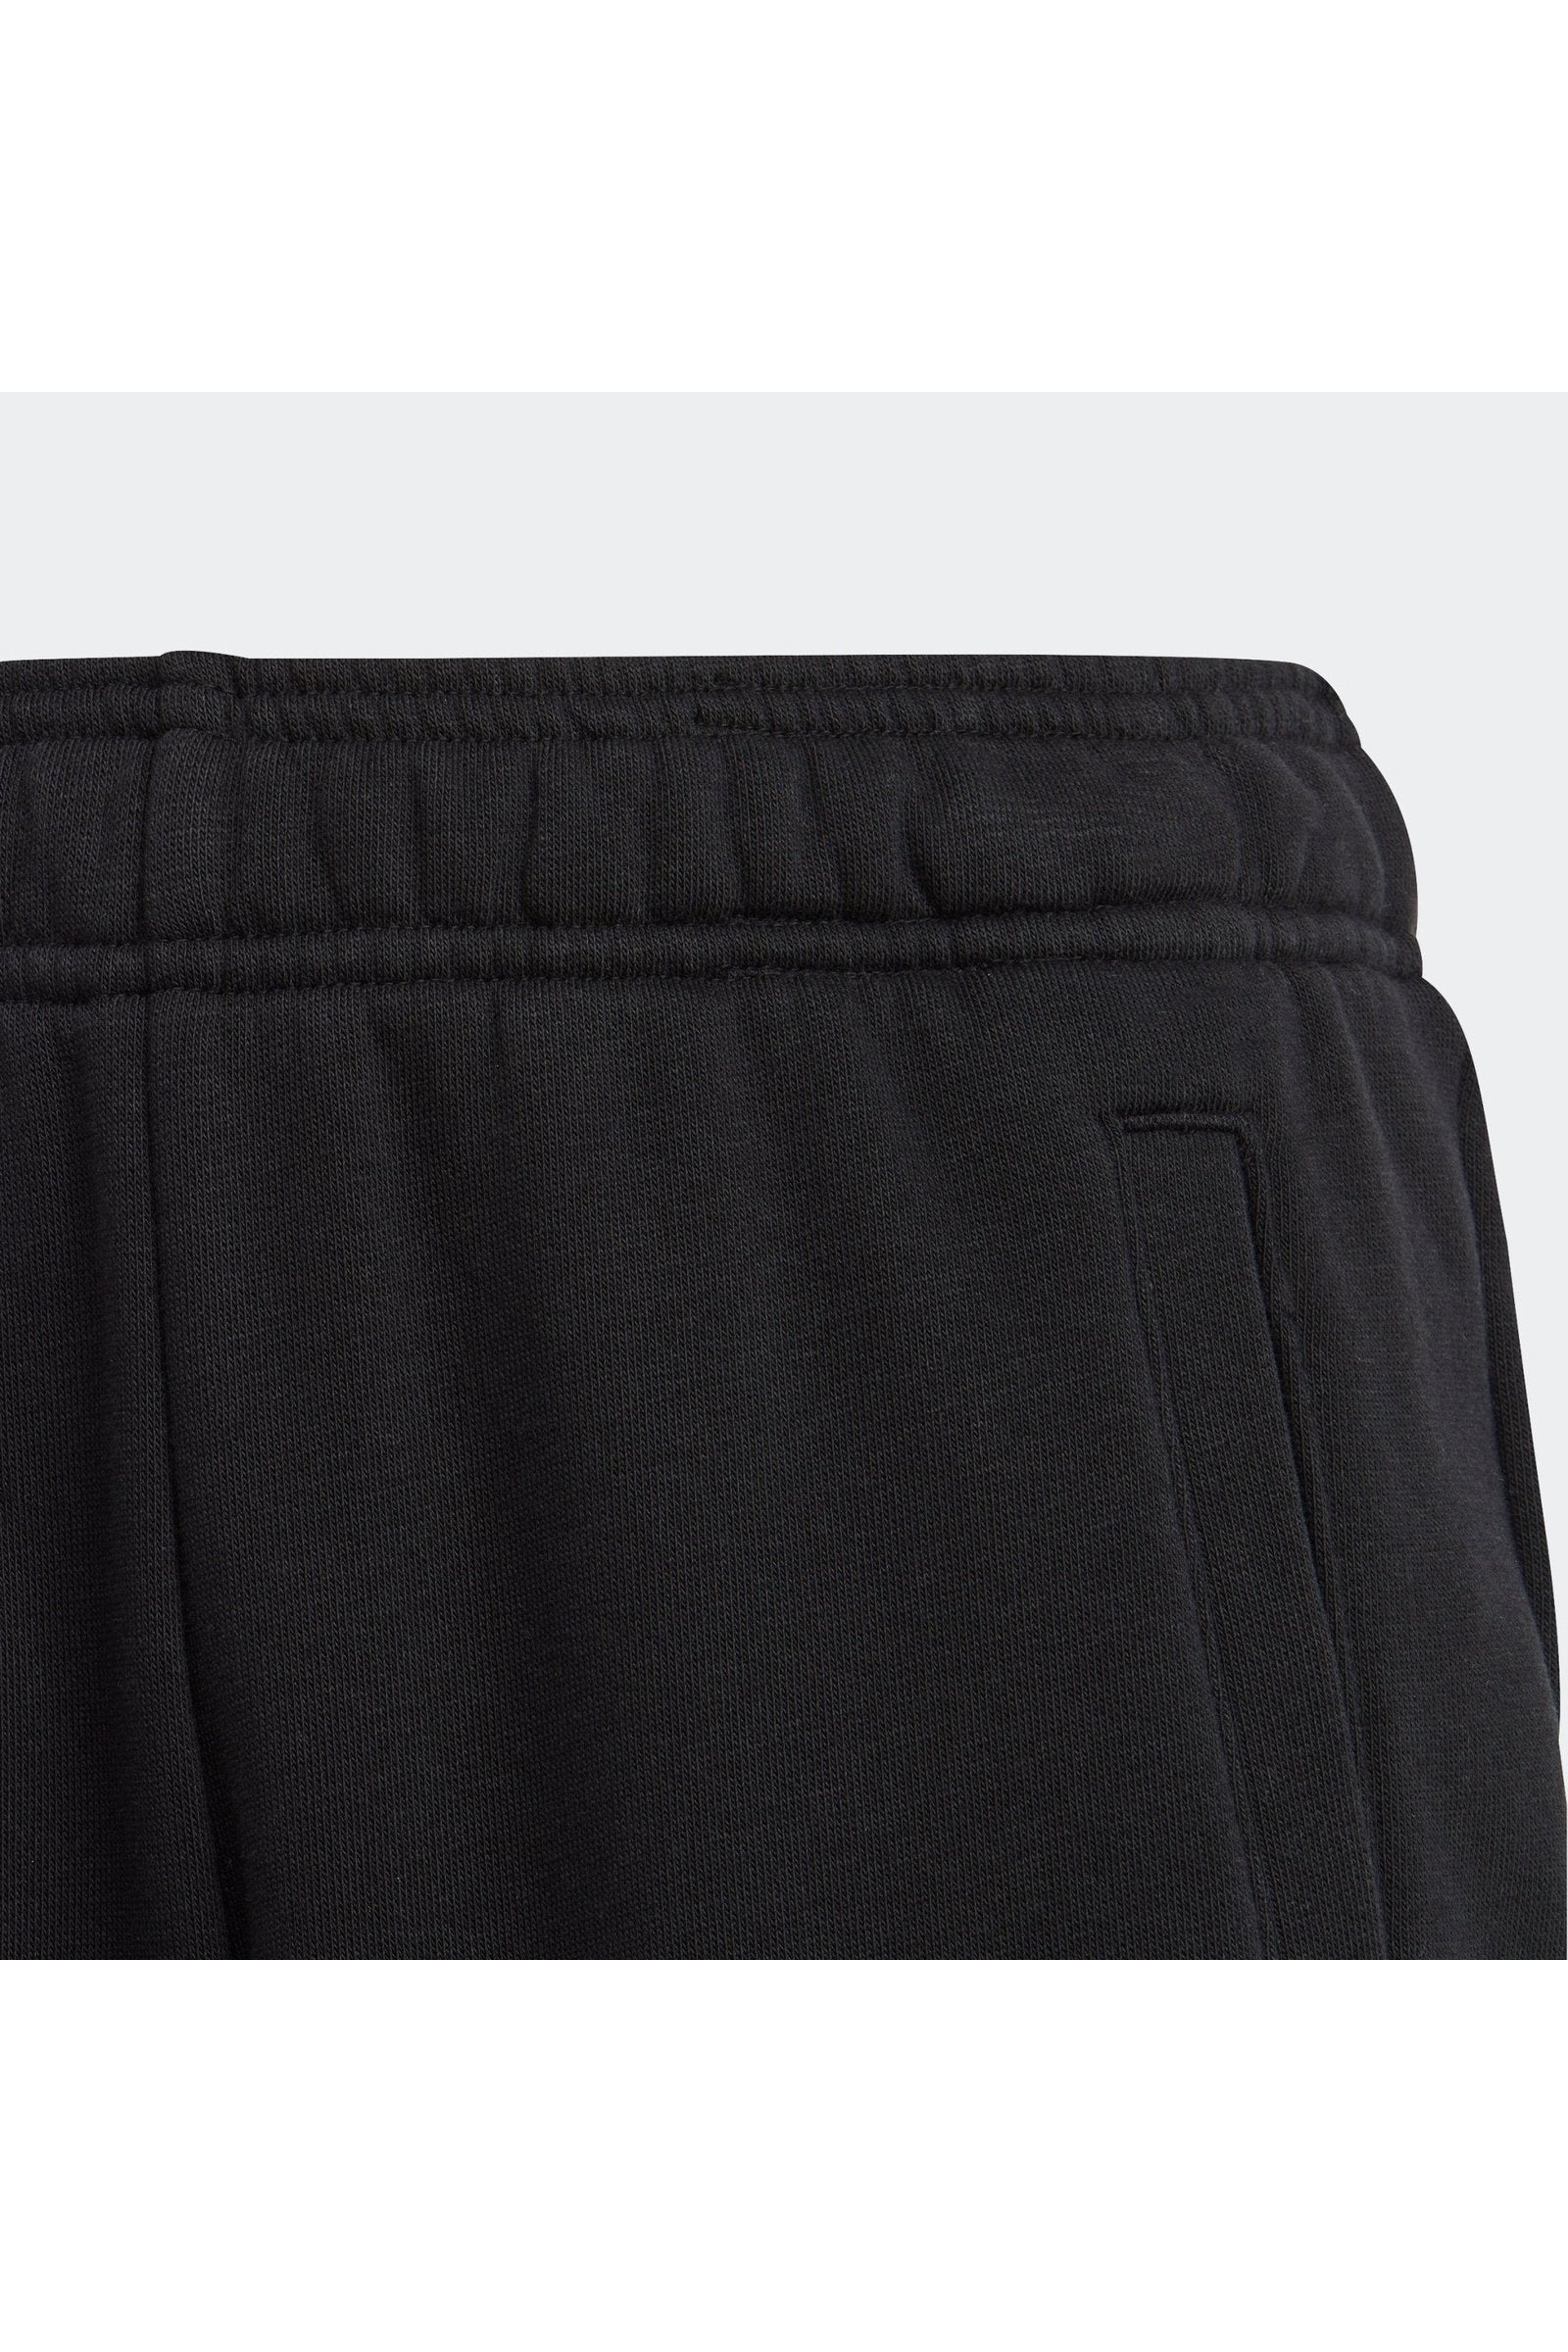 ADIDAS - מכנסיים ארוכים לילדים ESSENTIALS U בצבע שחור - MASHBIR//365